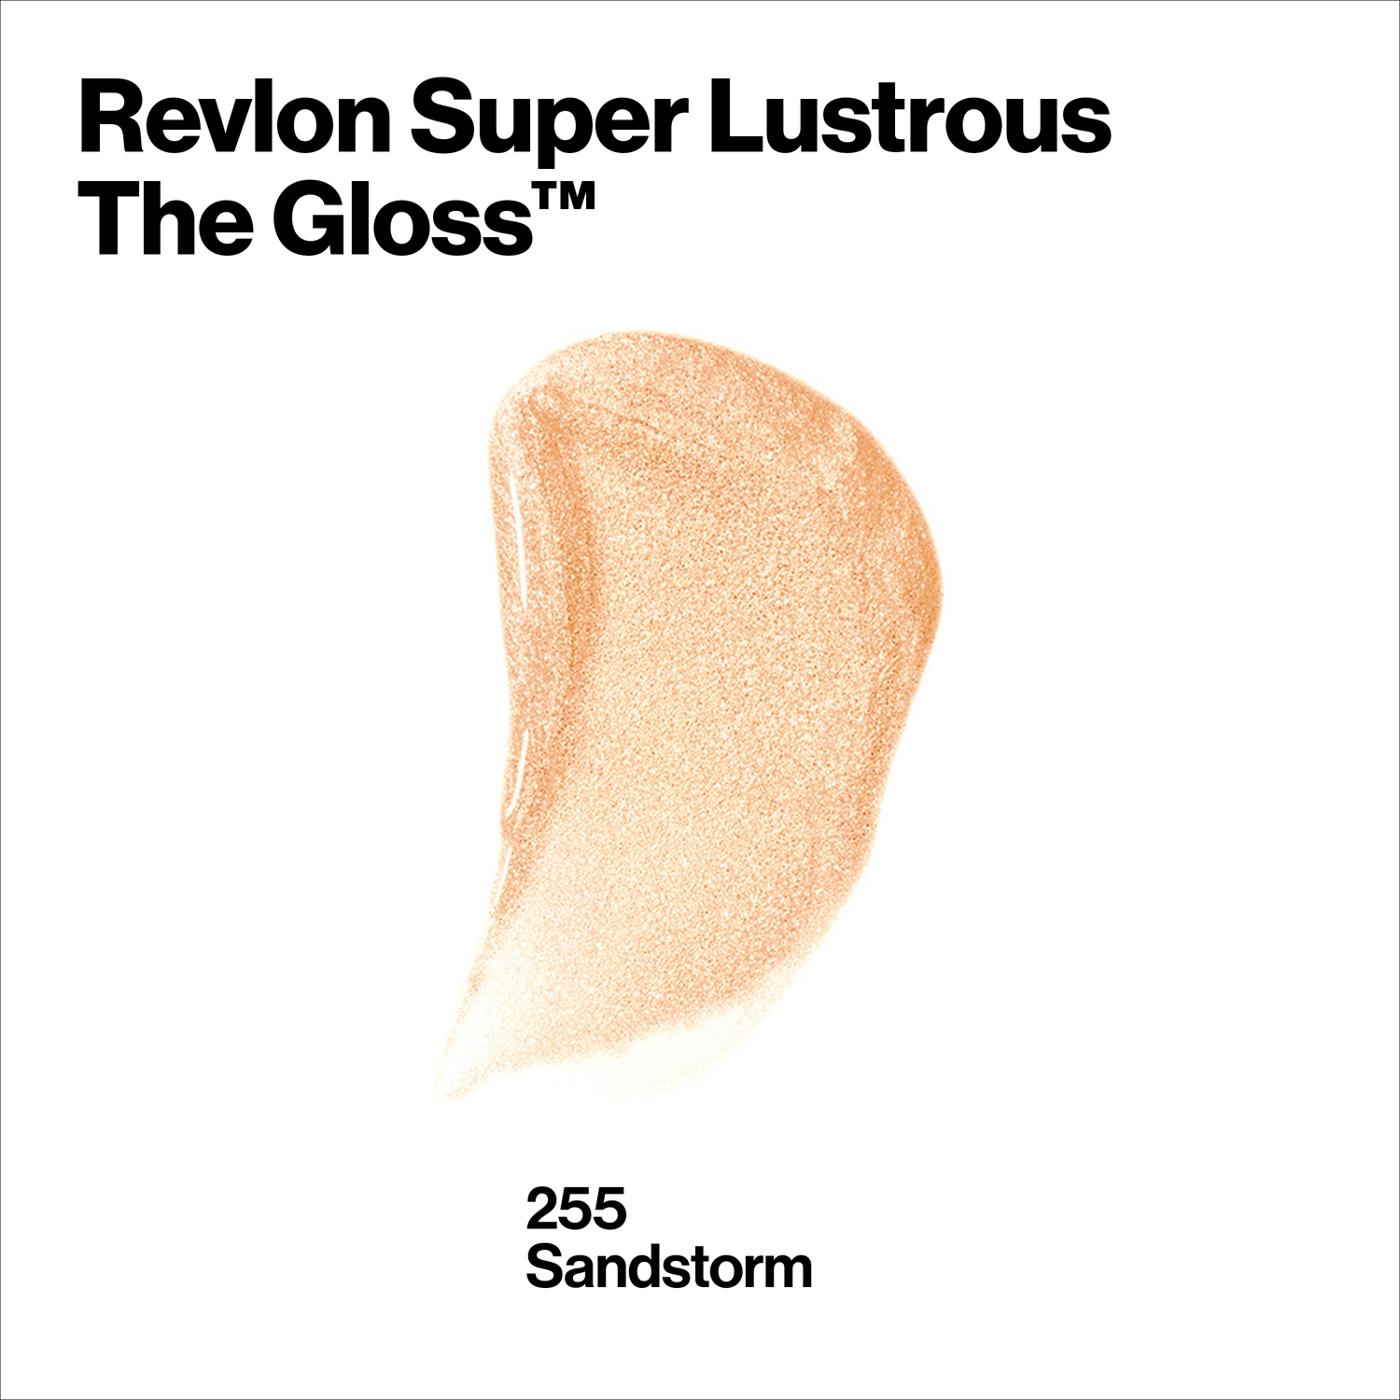 Revlon Super Lustrous The Gloss, 255 Sandstorm; image 4 of 9